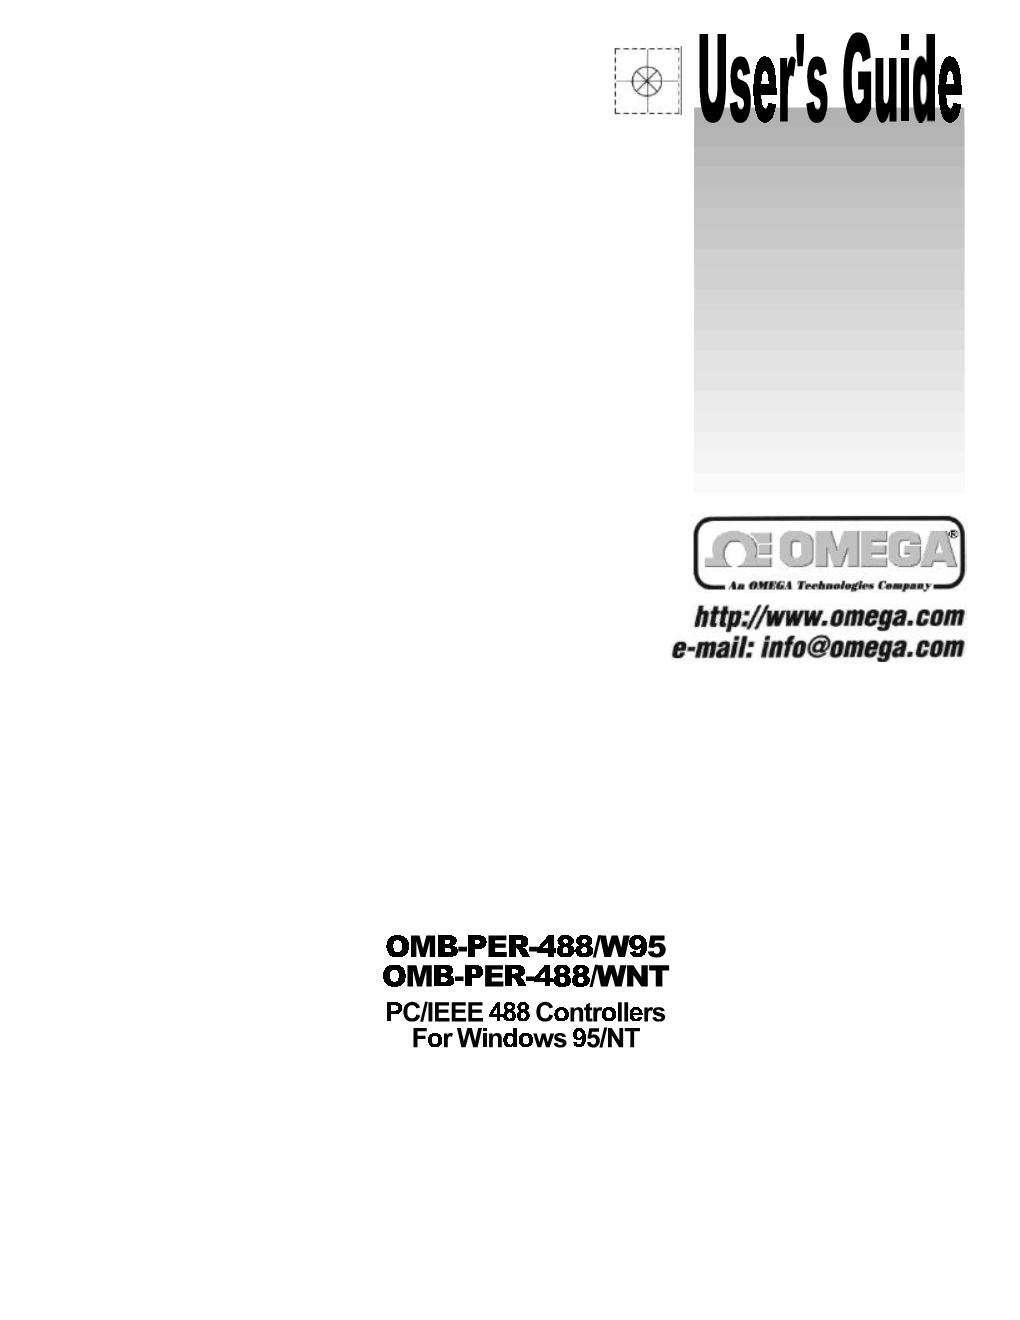 OMB-PER/488 Operator's Manual